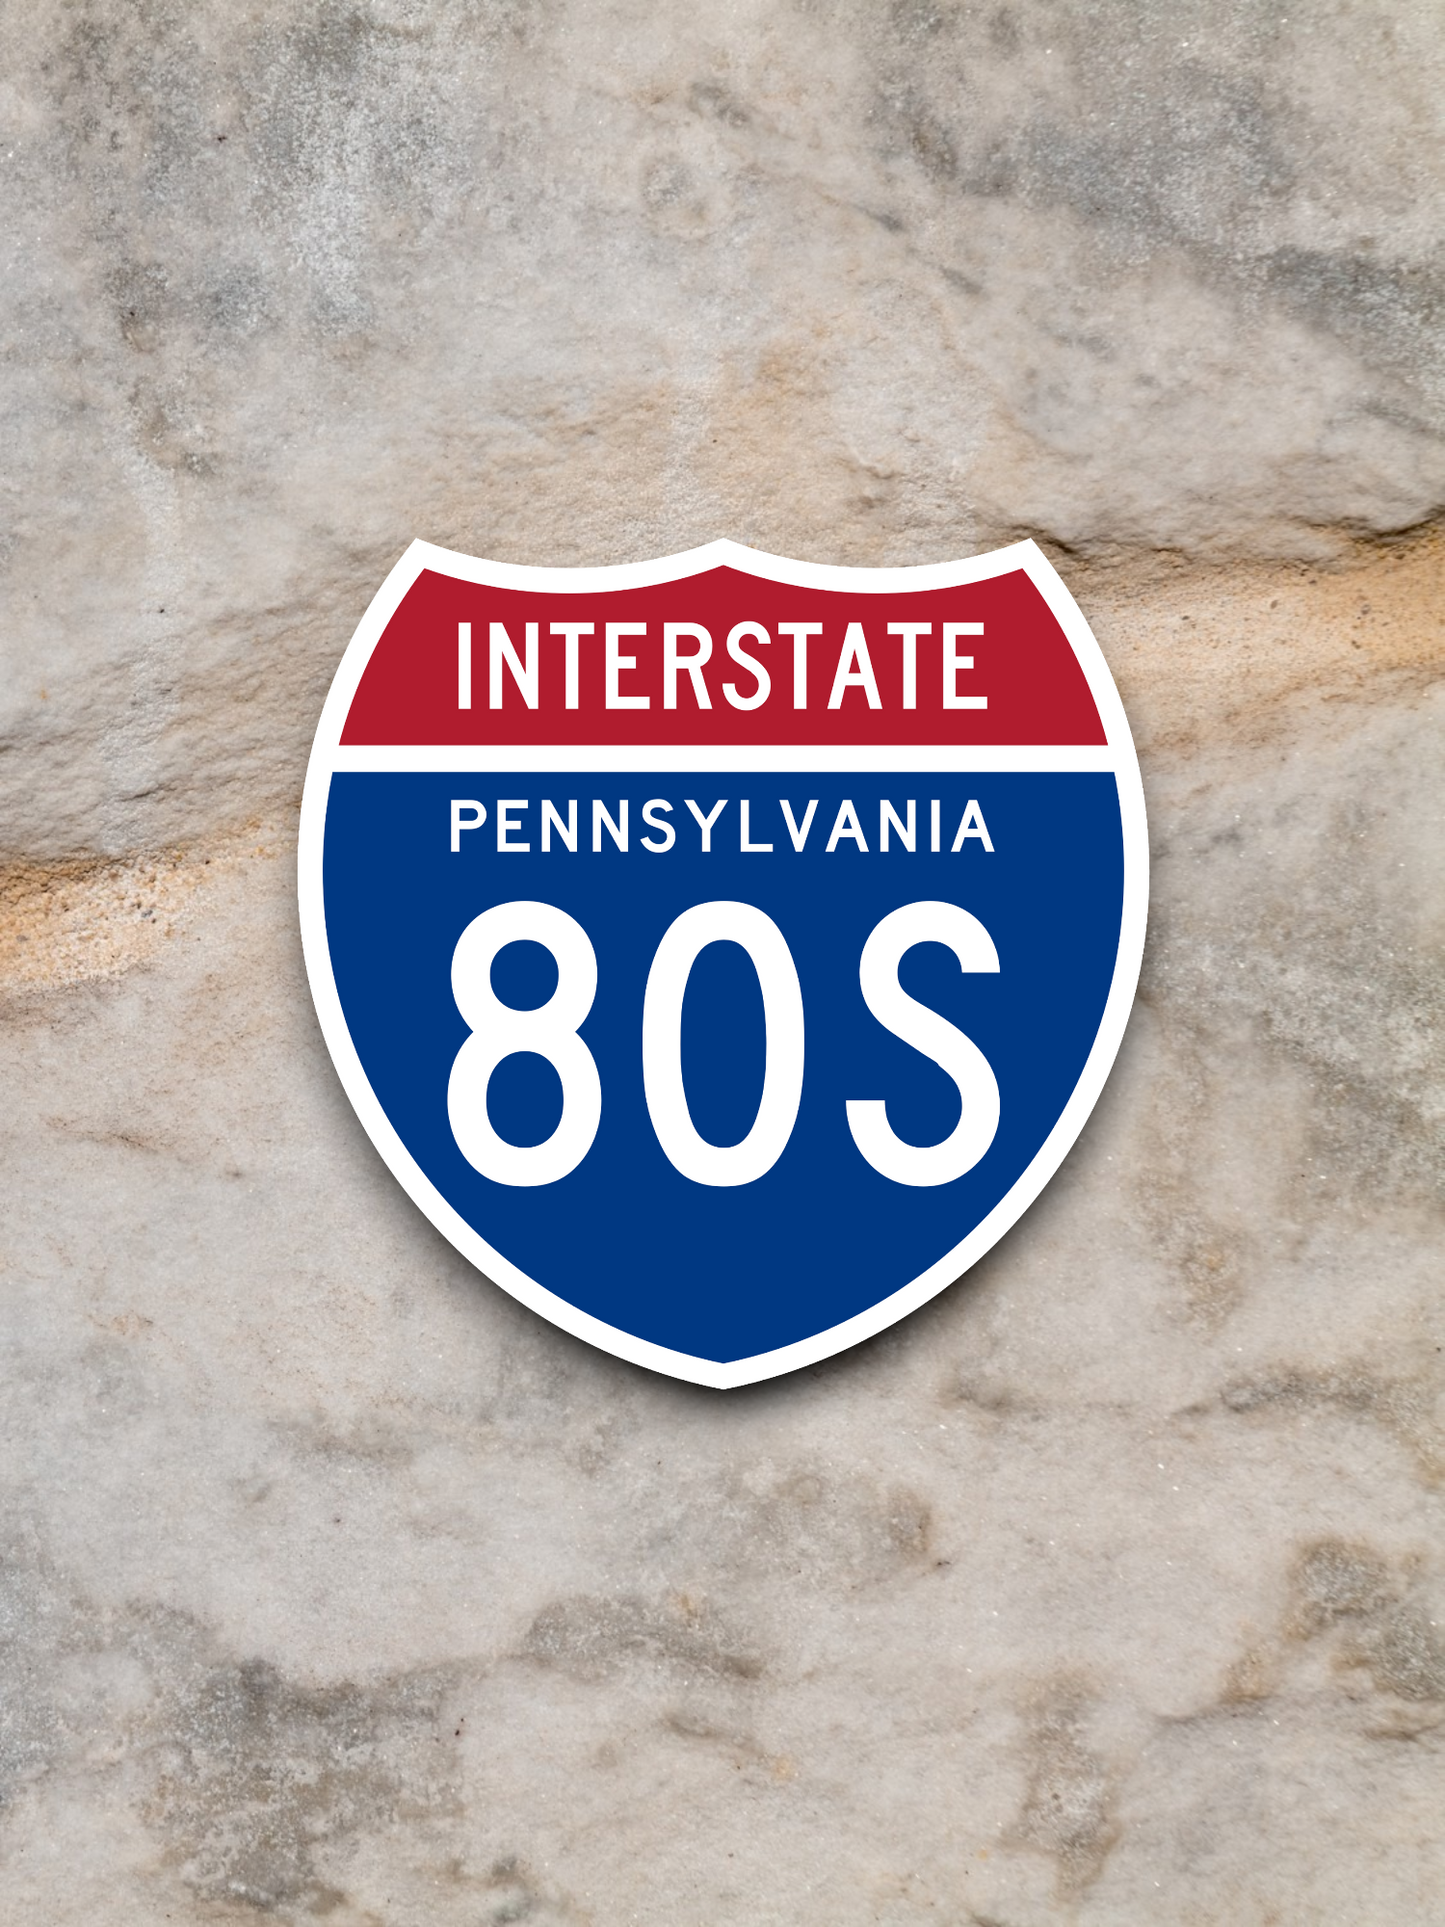 Interstate I-80S Pennsylvania - Road Sign Sticker